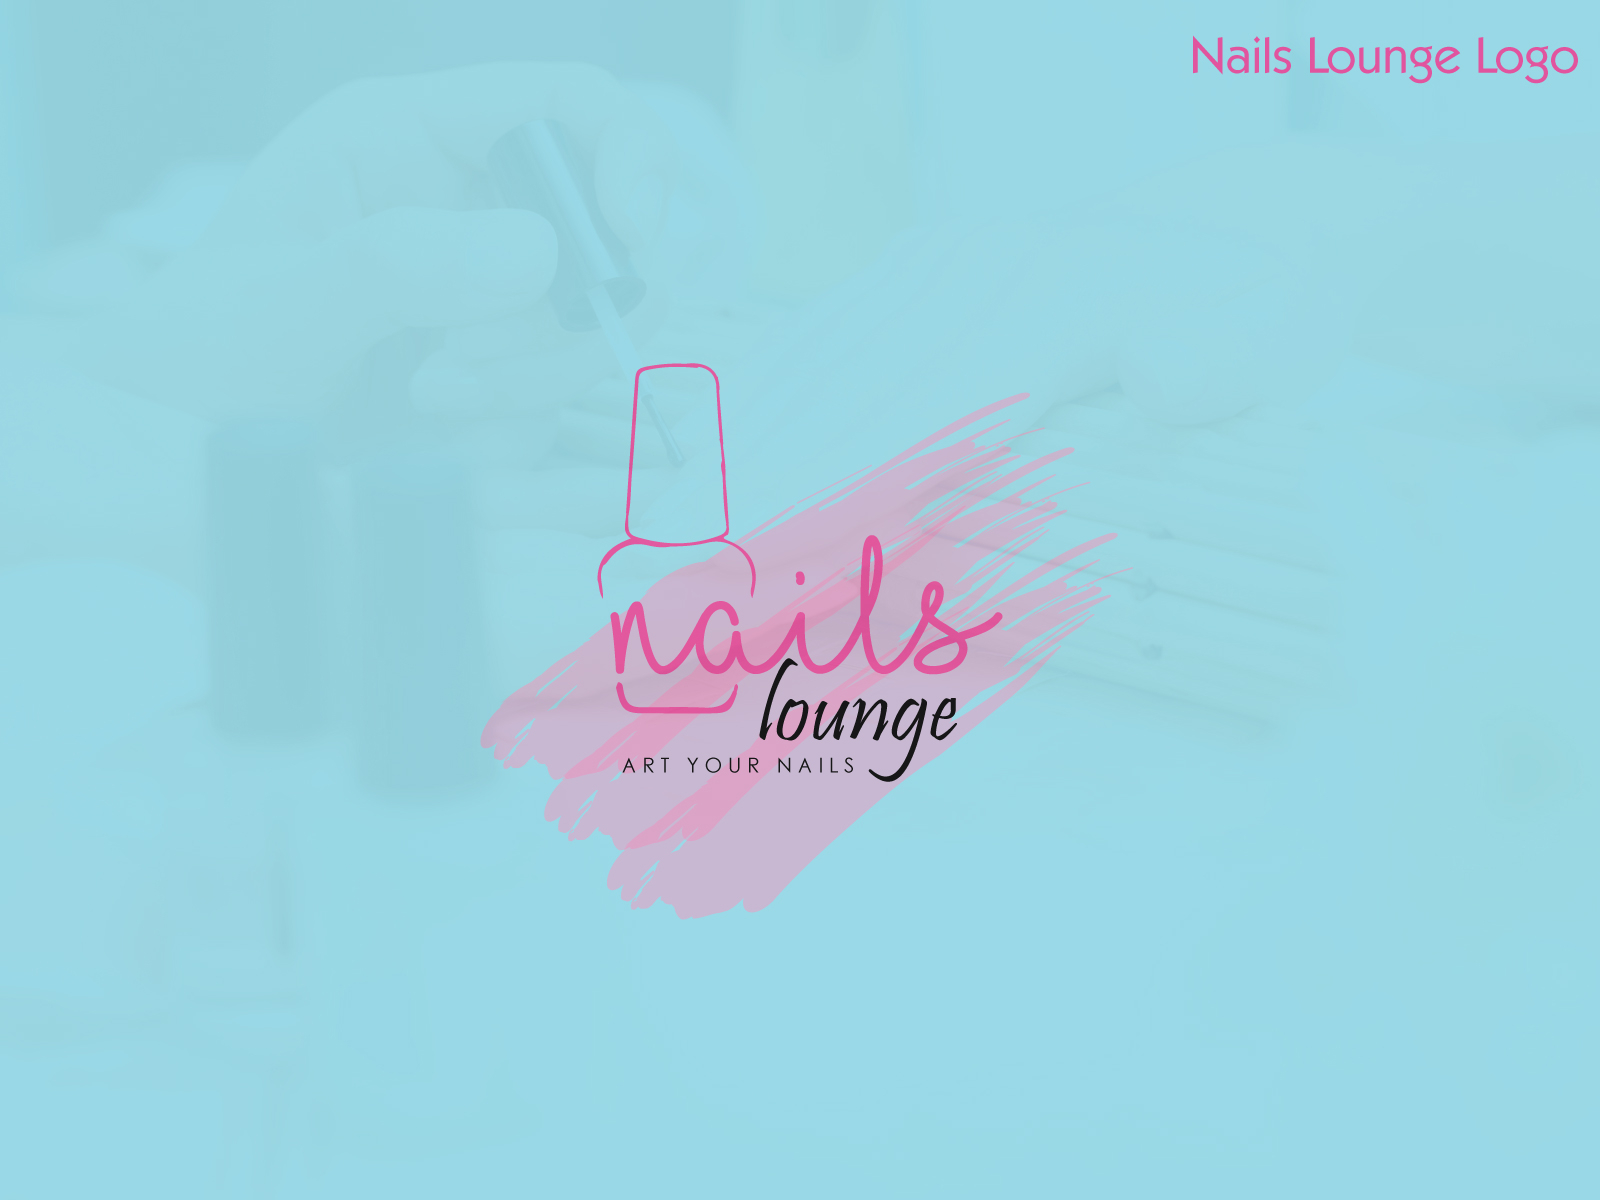 Nails Lounge Logo by Fouzia Kanij Khan on Dribbble